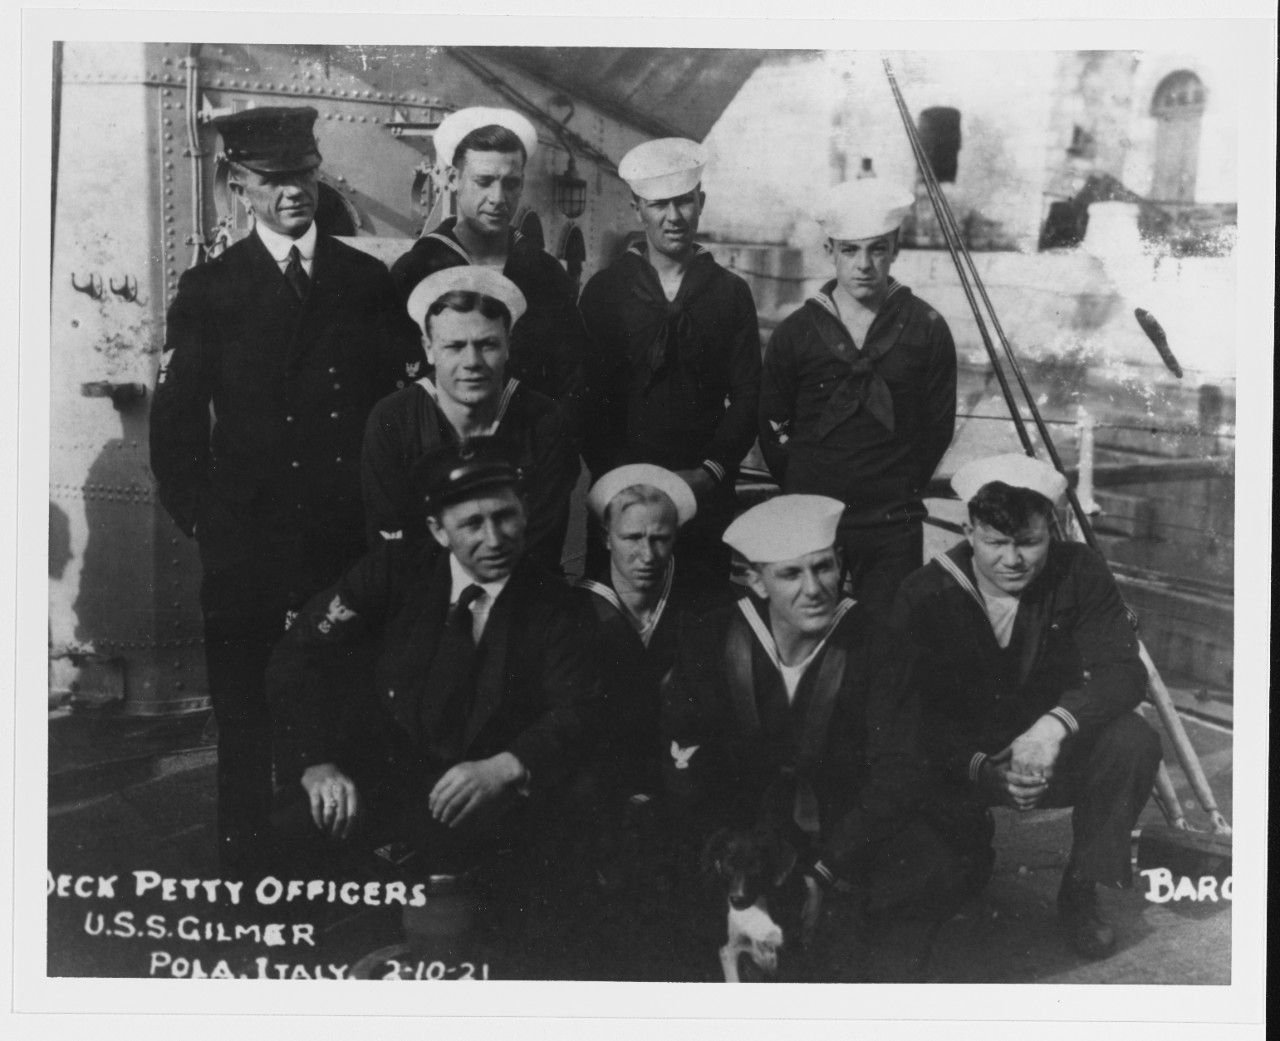 Deck petty officers of USS GILMER (DD-233)